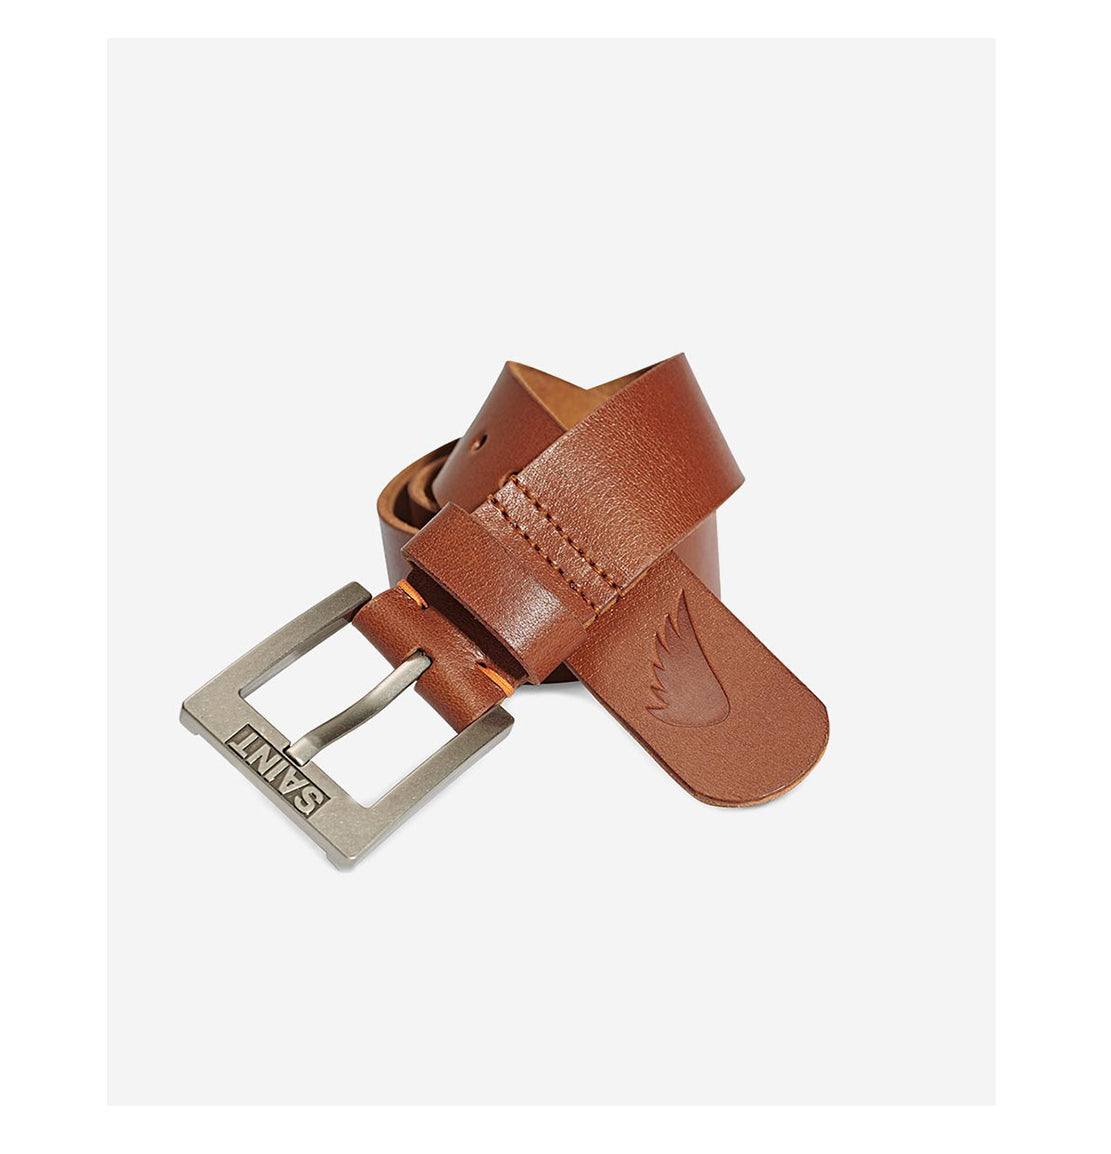 Saint tan leather belt